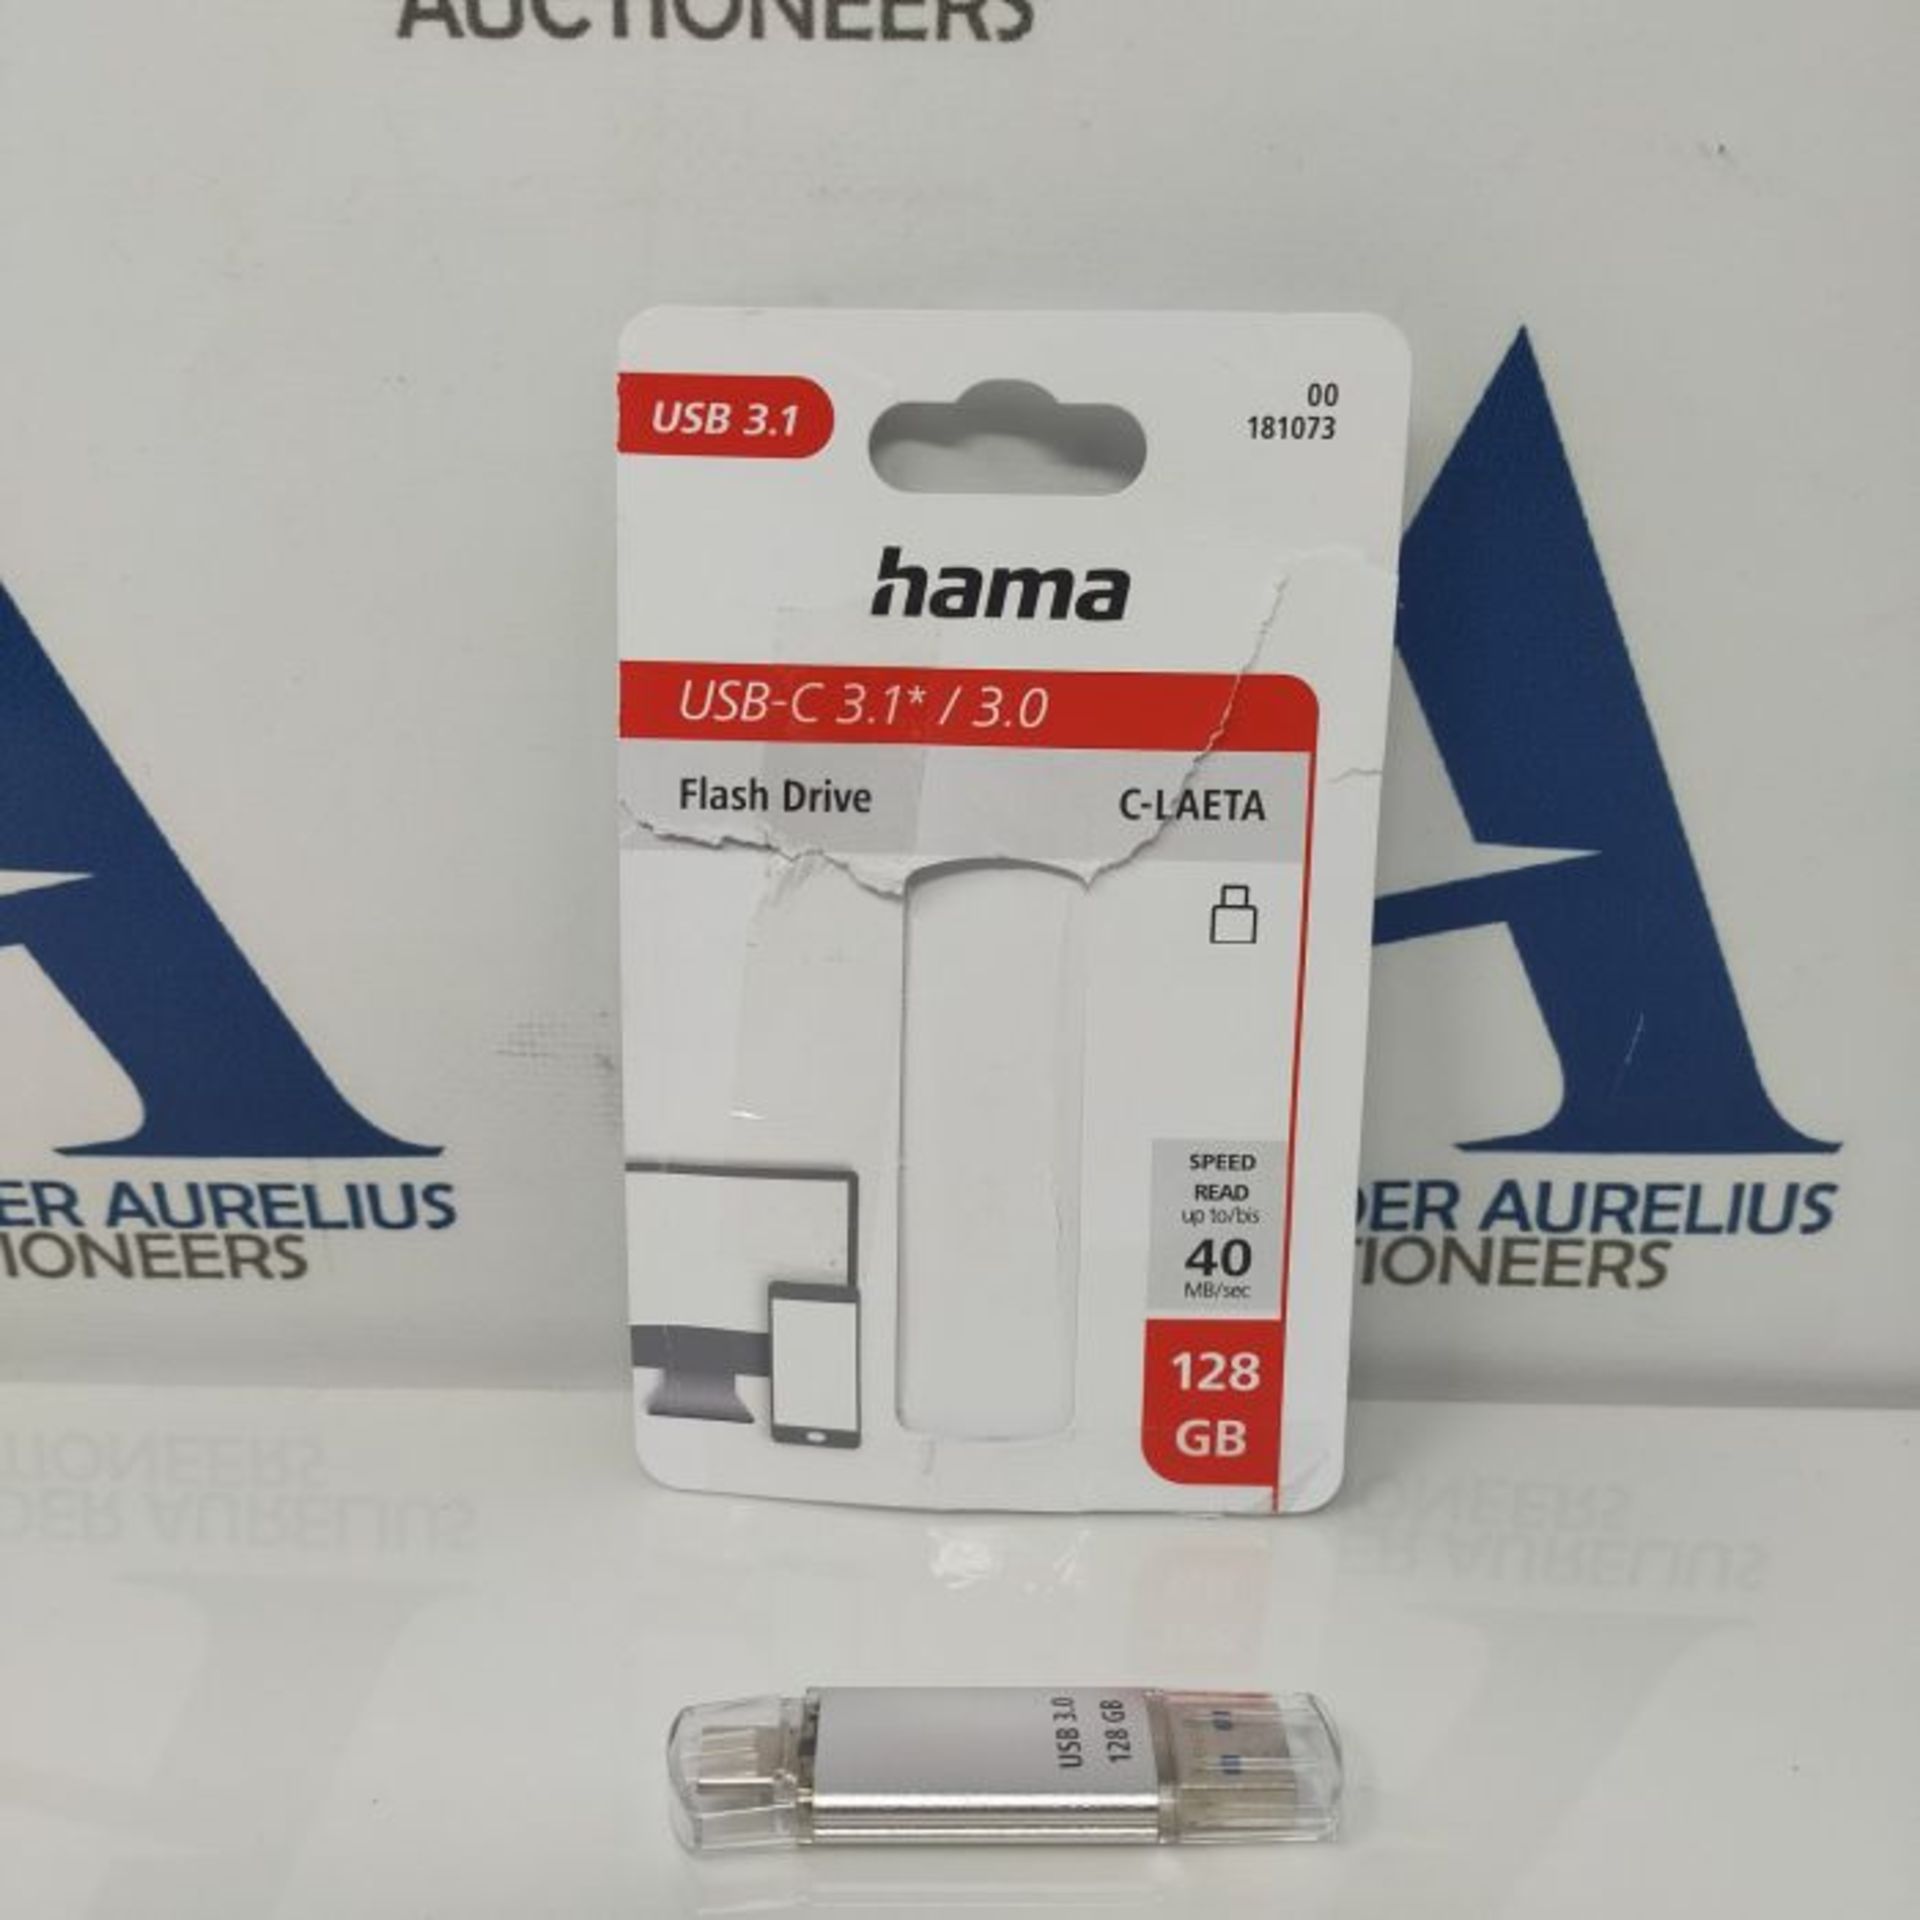 Hama USB Flash Drive with USB 3.0 & USB 3.1 Type-C silver Silver 128 GB, 00181073 - Image 2 of 2